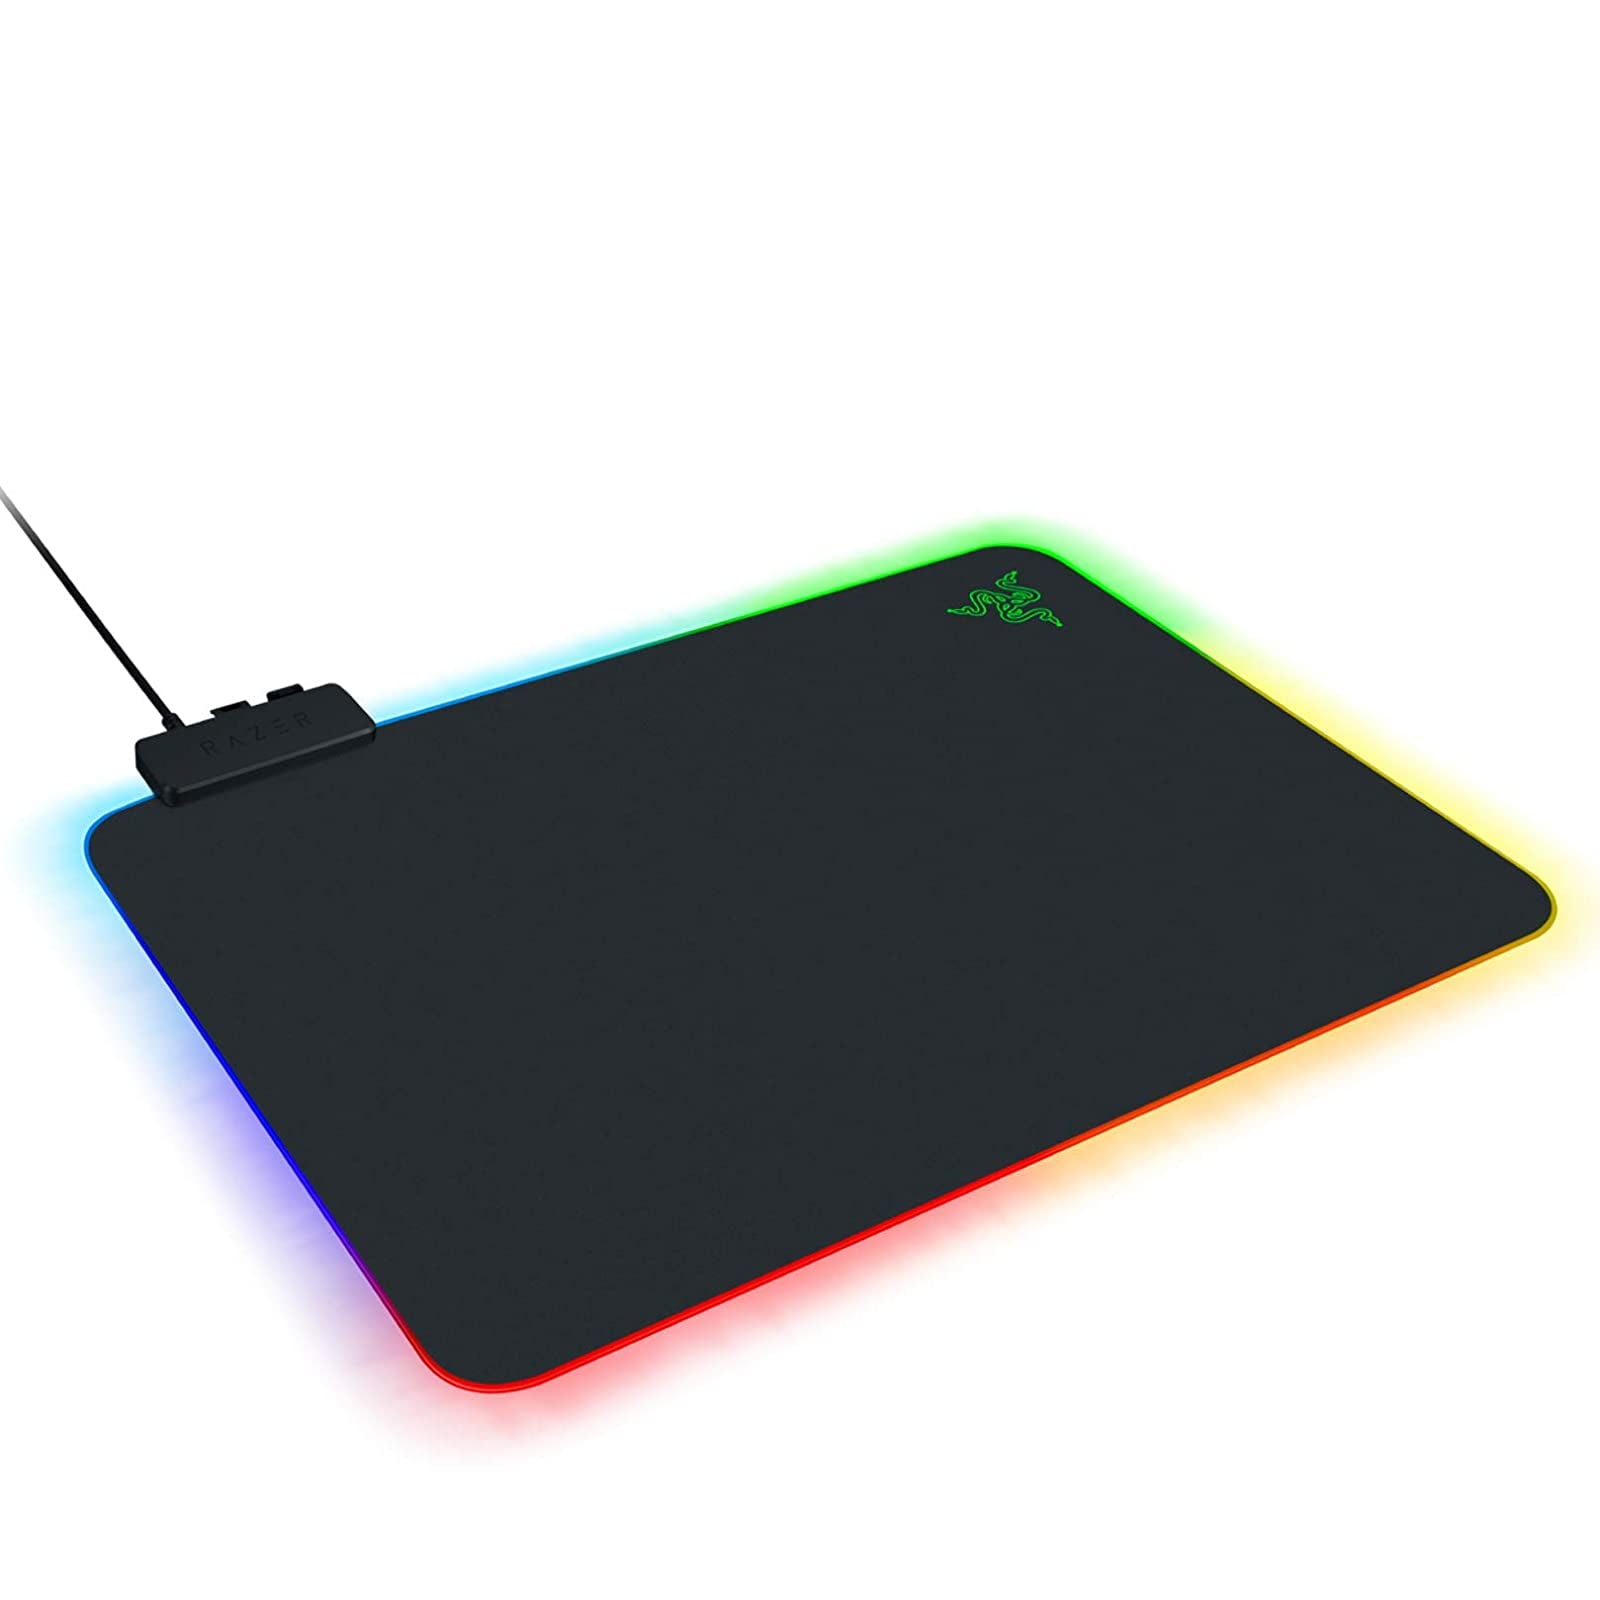 Razer Firefly Hard V2 RGB Gaming Mouse Pad: Customizable Chroma